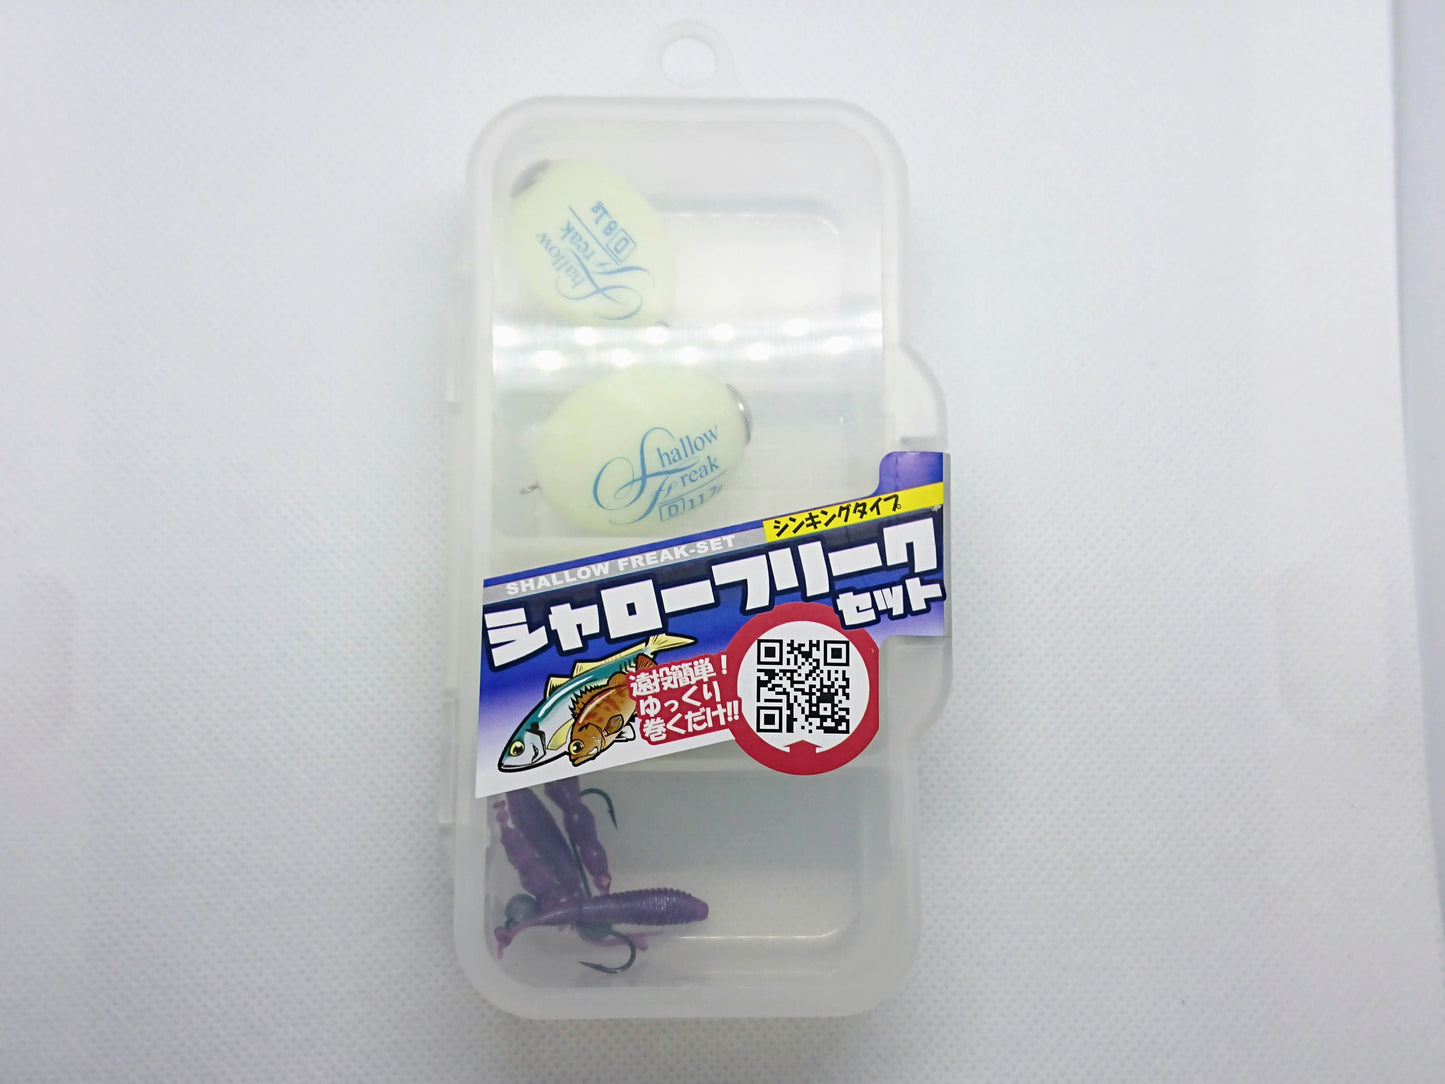 🔰Float & Softbait Pack | Arukazik Japan - Shallow Freak Set